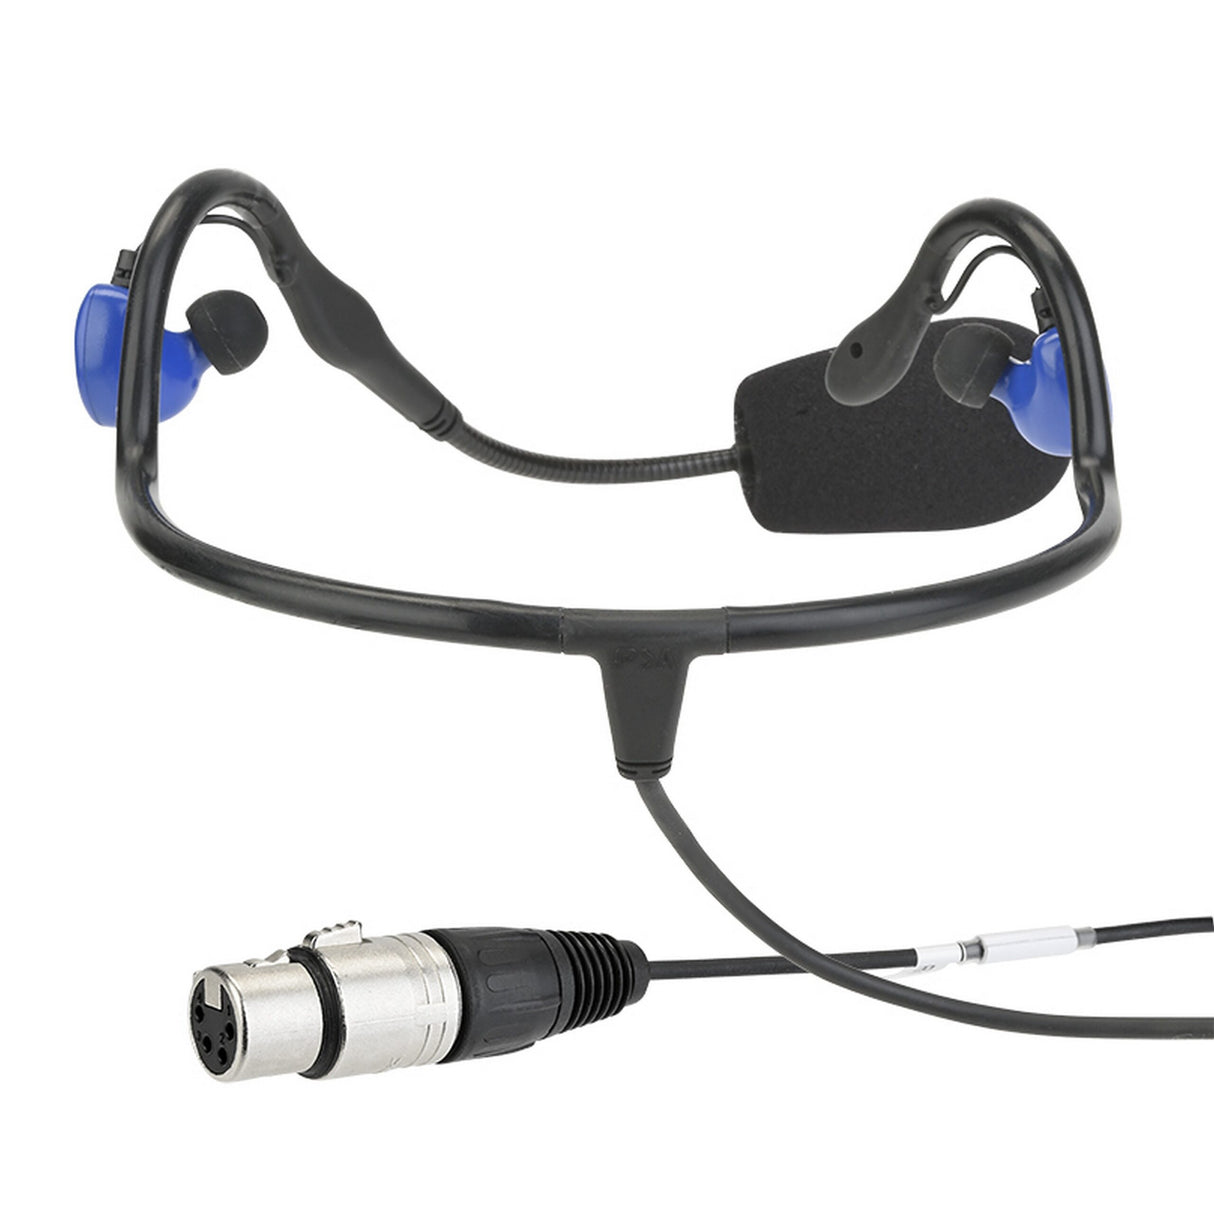 Clear-Com CC-70-X4 Dual Ear Headset with 4-Pin Female XLR Connector